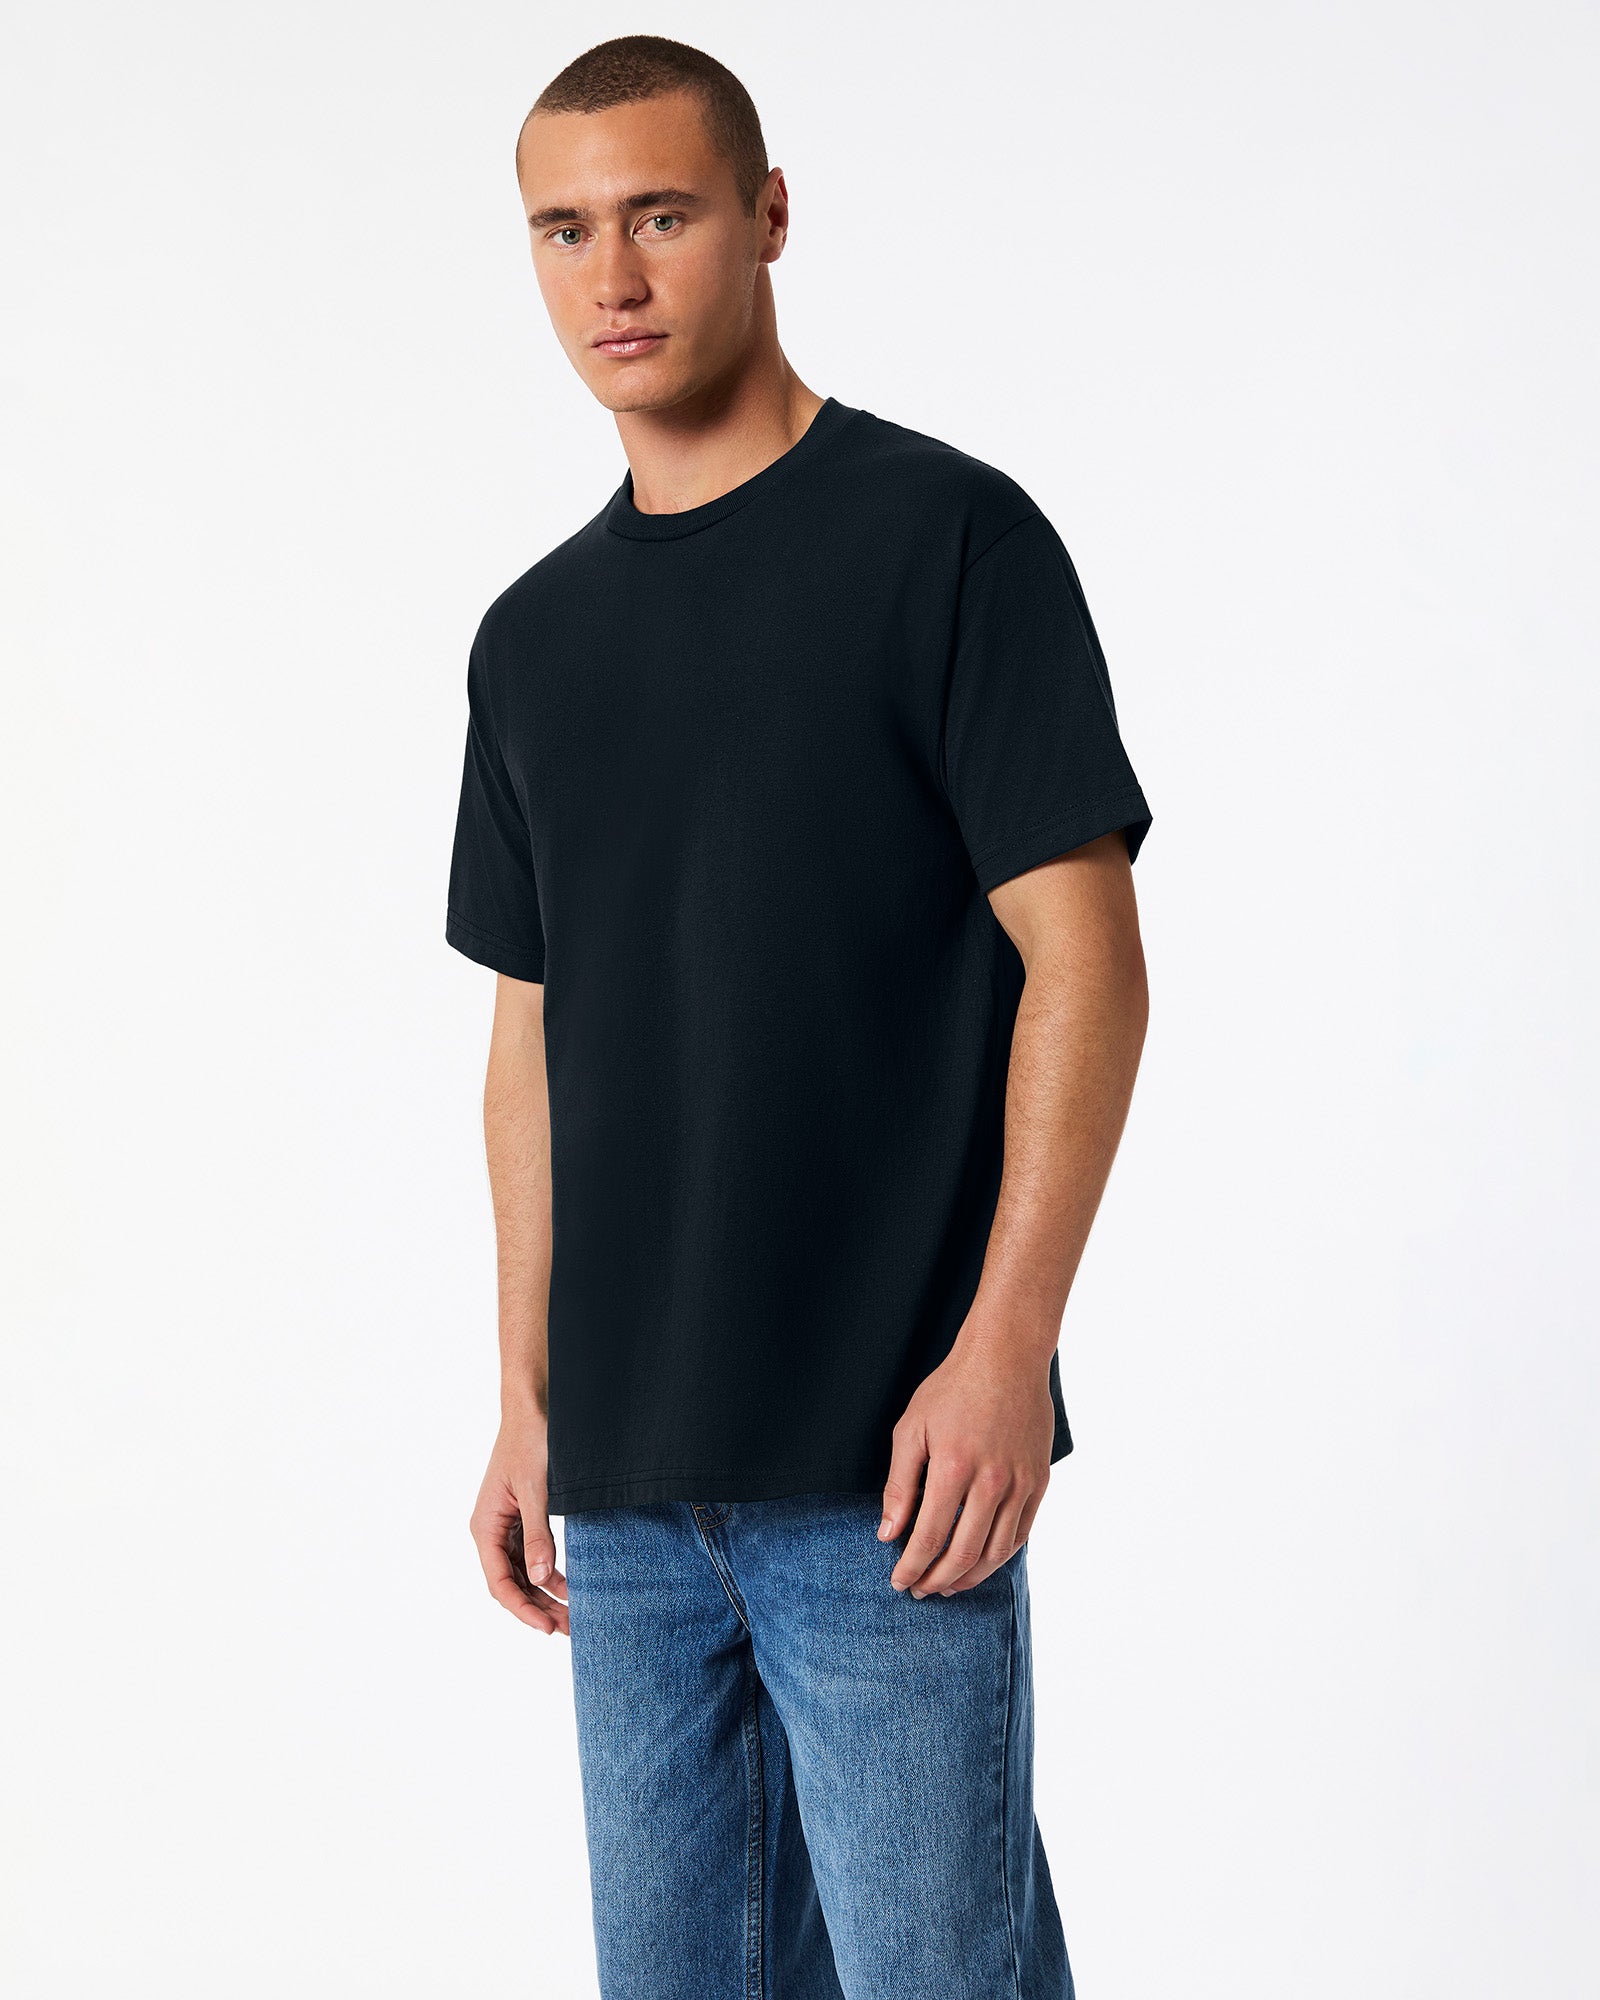 Heavyweight Unisex T-Shirt - Black